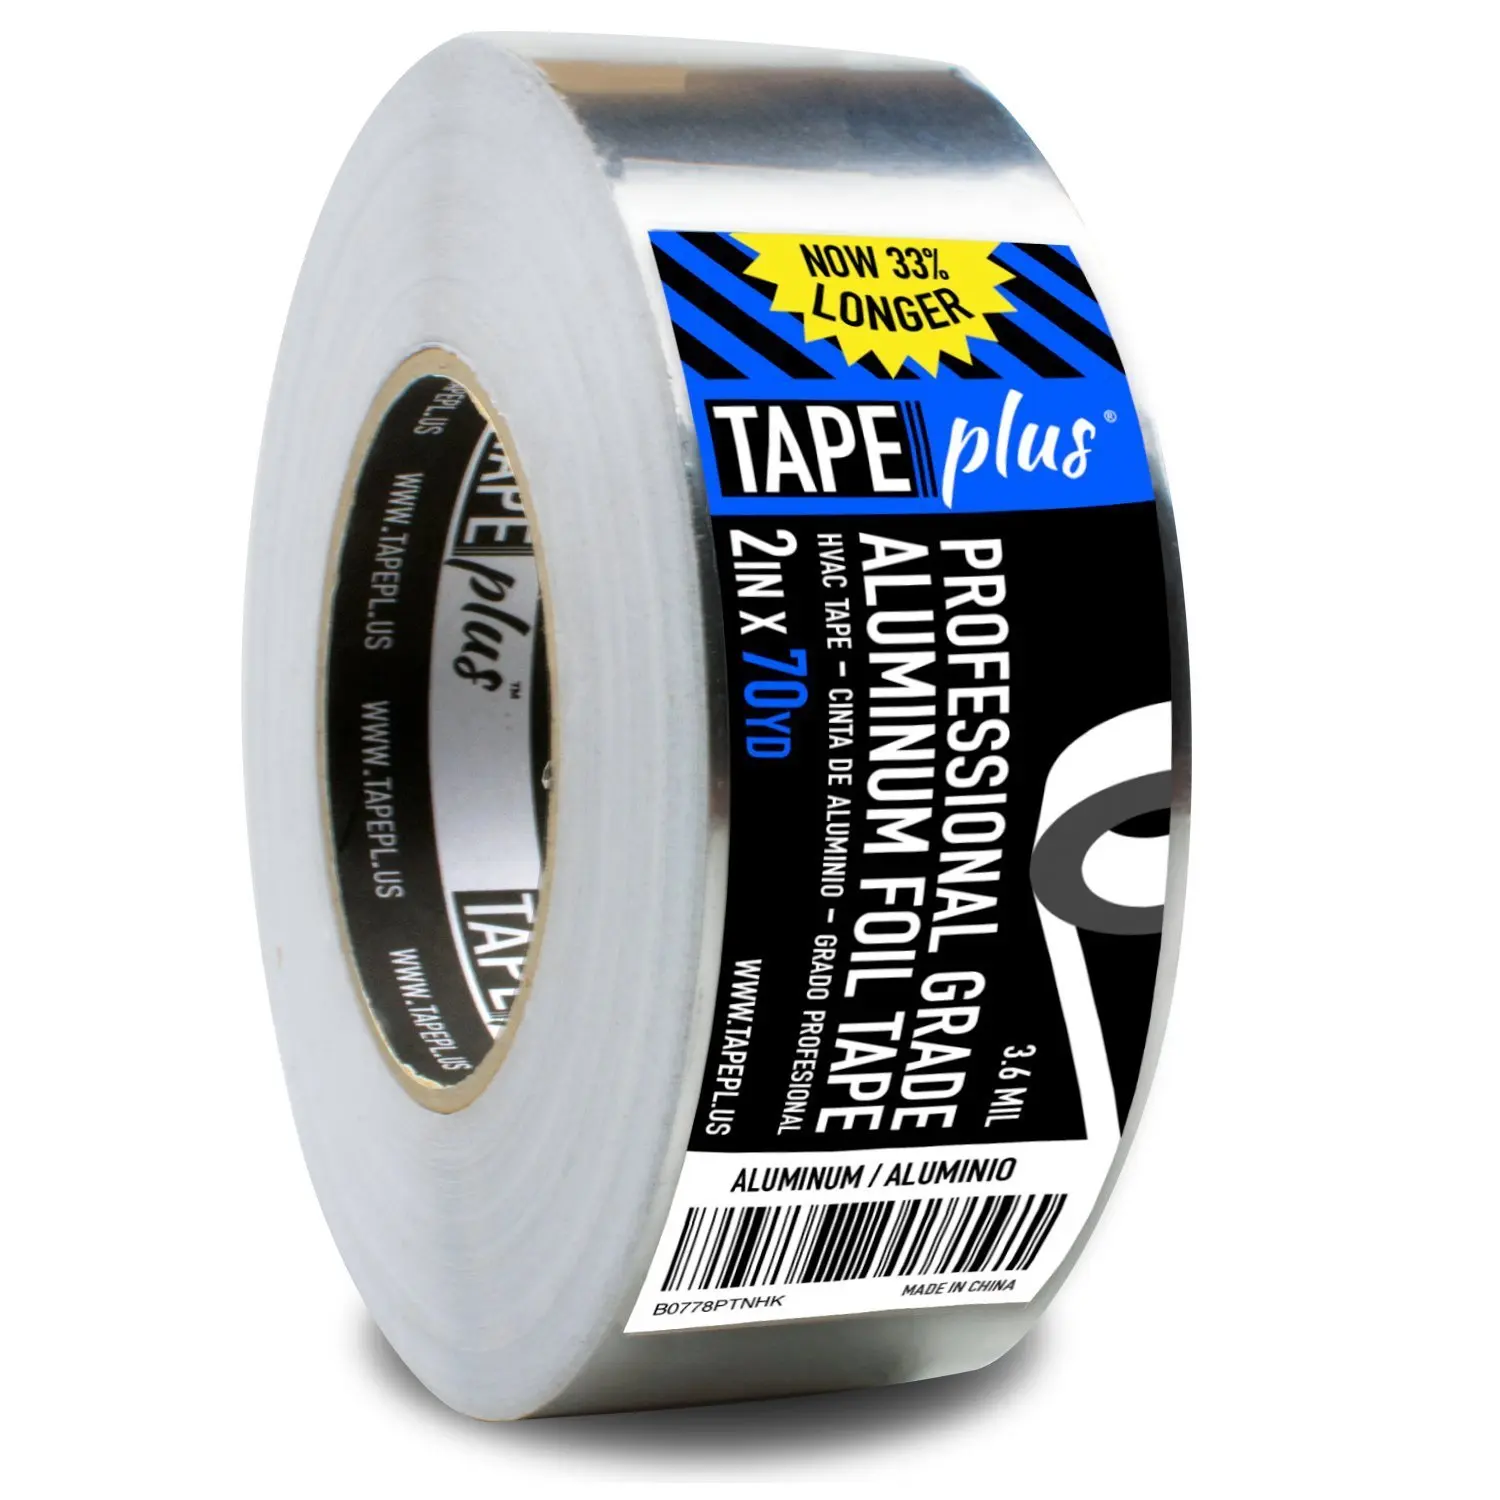 Lenta plus. Mylar Air Duct. Sealant Patch Tape. Foil Tape. Лента плюс.